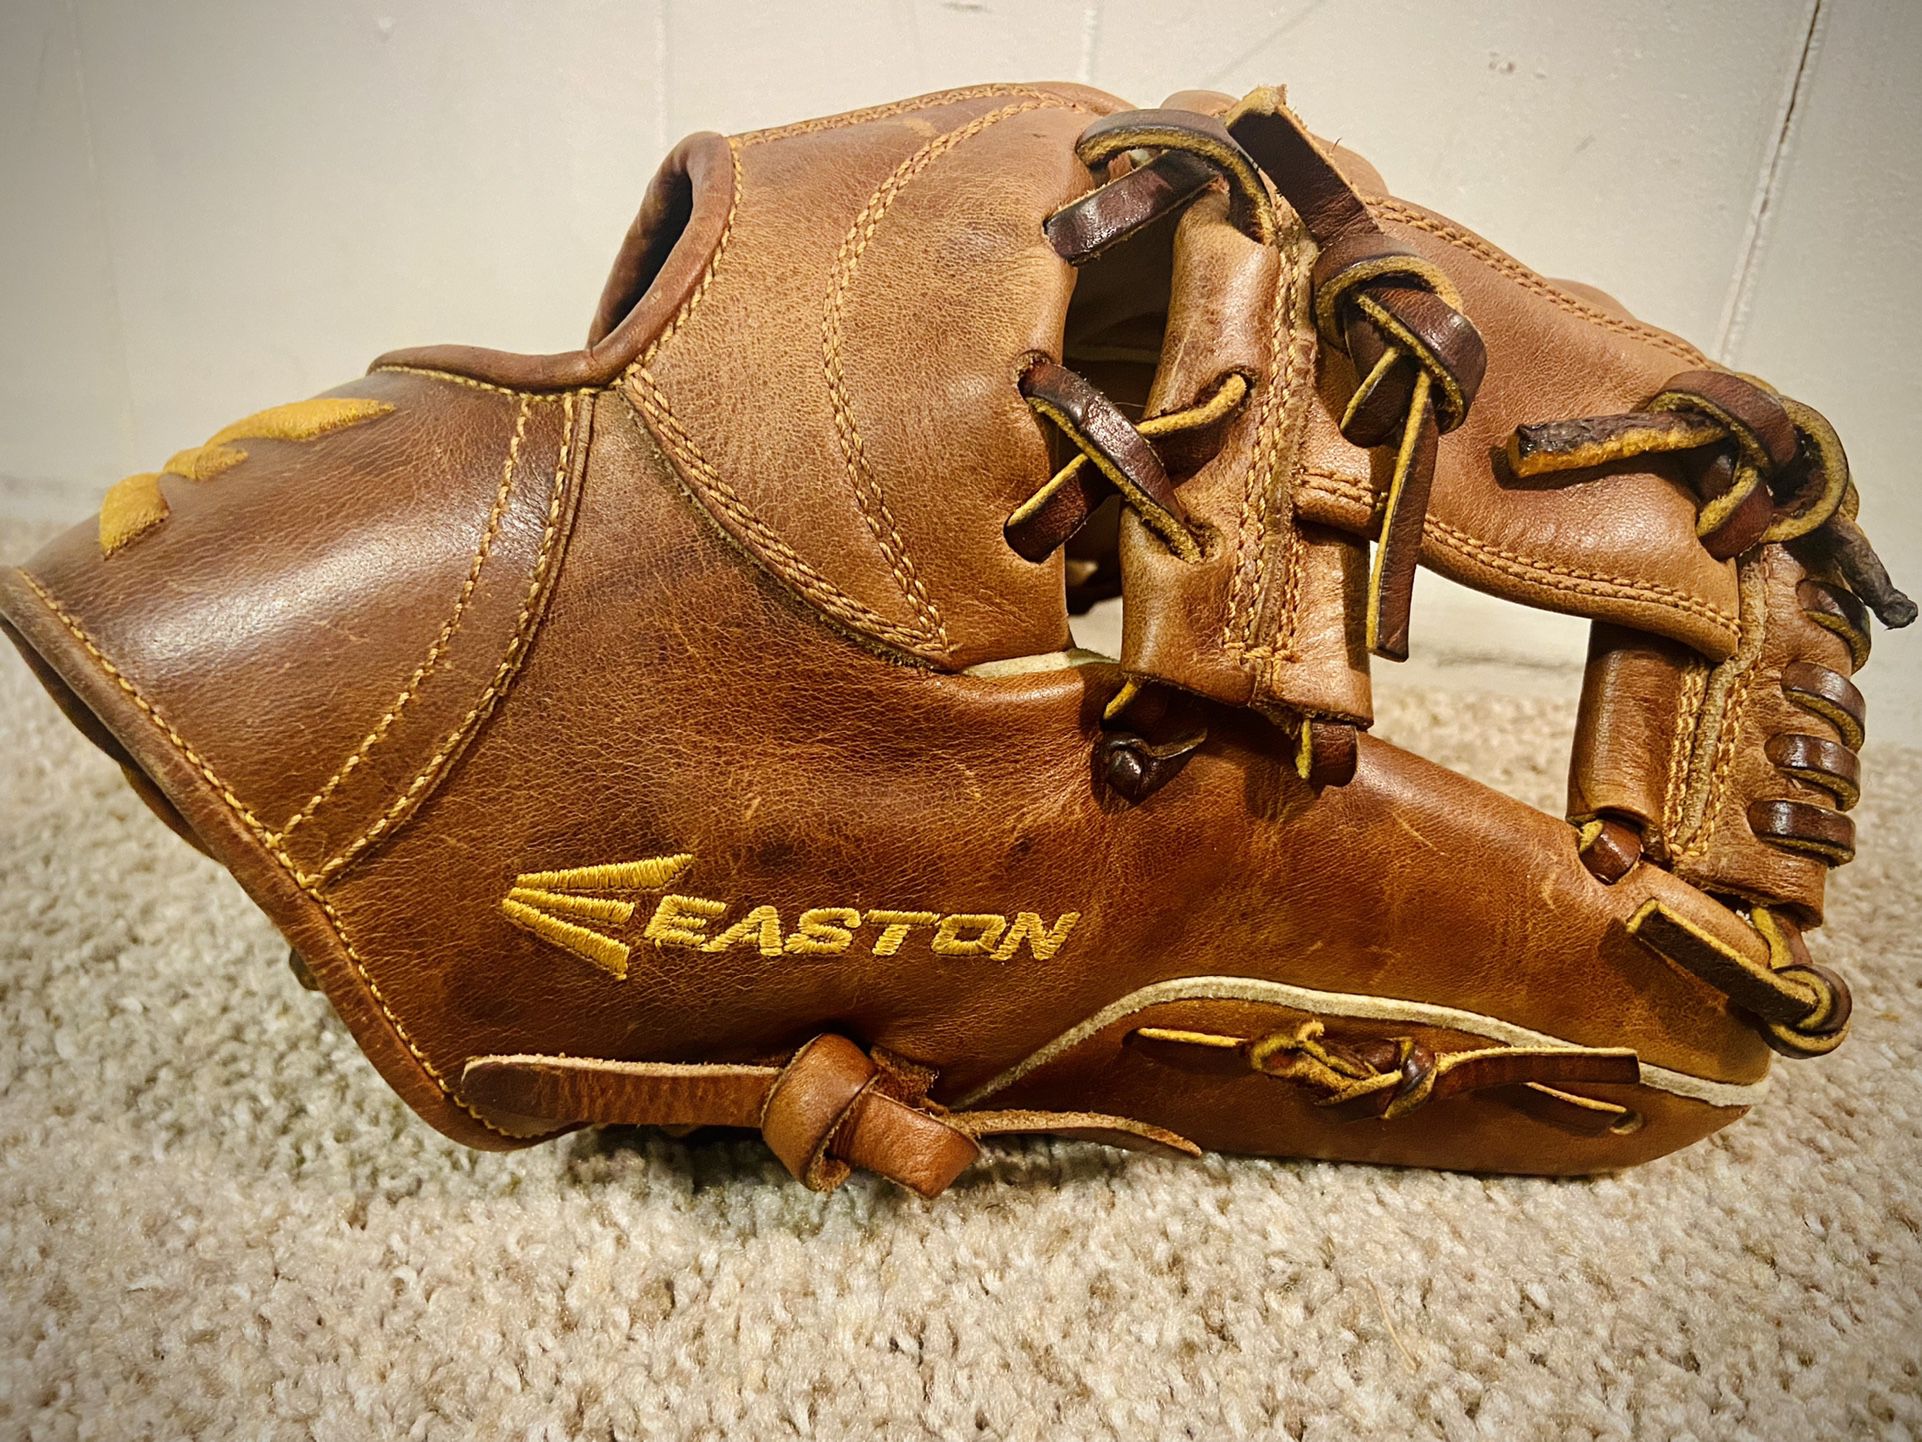 Easton Core Pro Glove